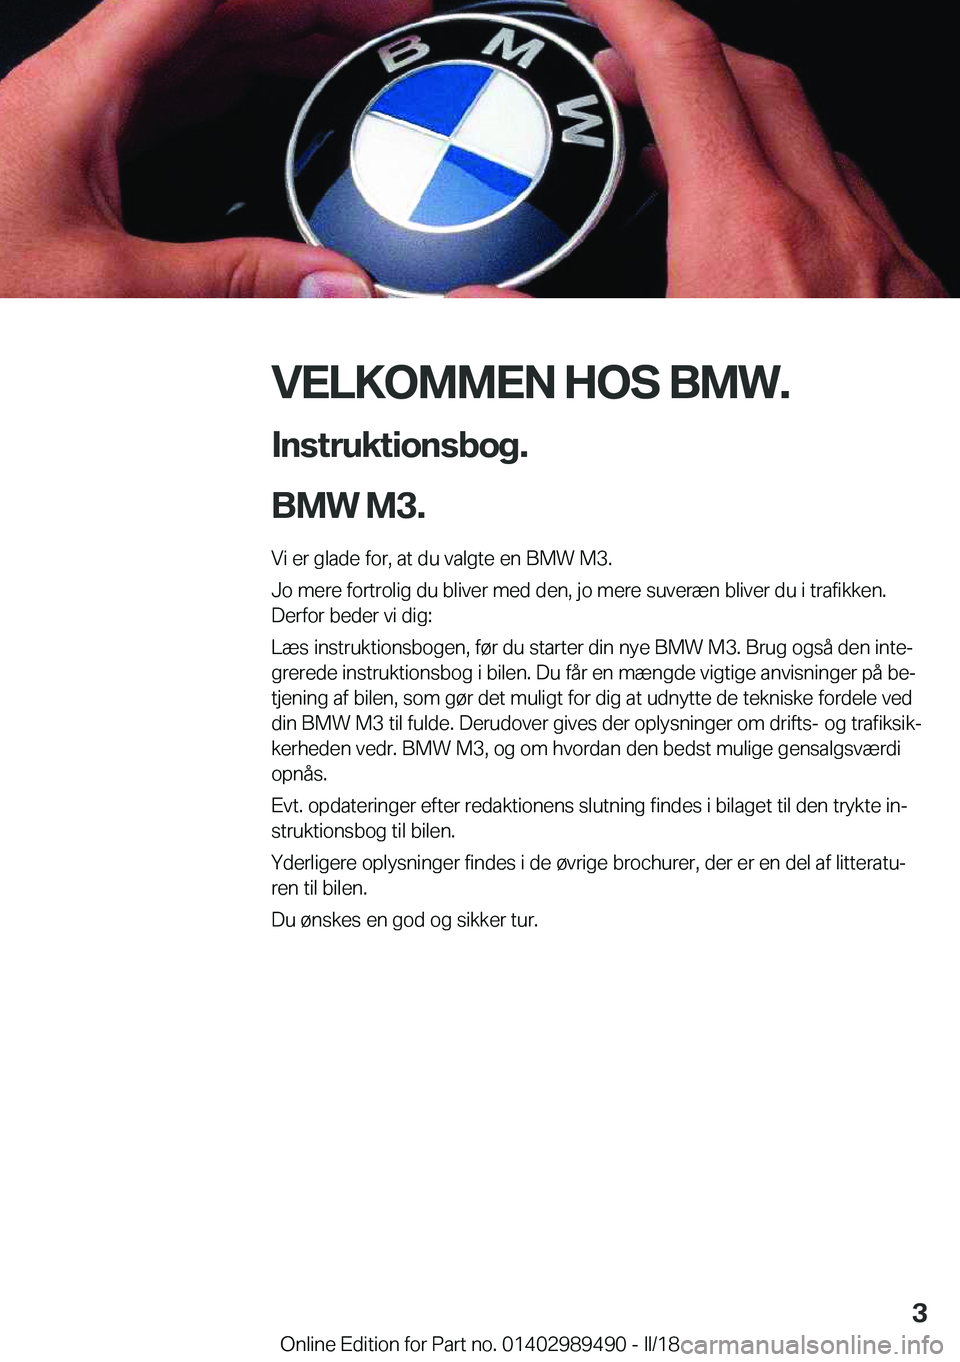 BMW M3 2018  InstruktionsbØger (in Danish) �V�E�L�K�O�M�M�E�N��H�O�S��B�M�W�.
�I�n�s�t�r�u�k�t�i�o�n�s�b�o�g�.
�B�M�W��M�3�. �V�i� �e�r� �g�l�a�d�e� �f�o�r�,� �a�t� �d�u� �v�a�l�g�t�e� �e�n� �B�M�W� �M�3�.
�J�o� �m�e�r�e� �f�o�r�t�r�o�l�i�g